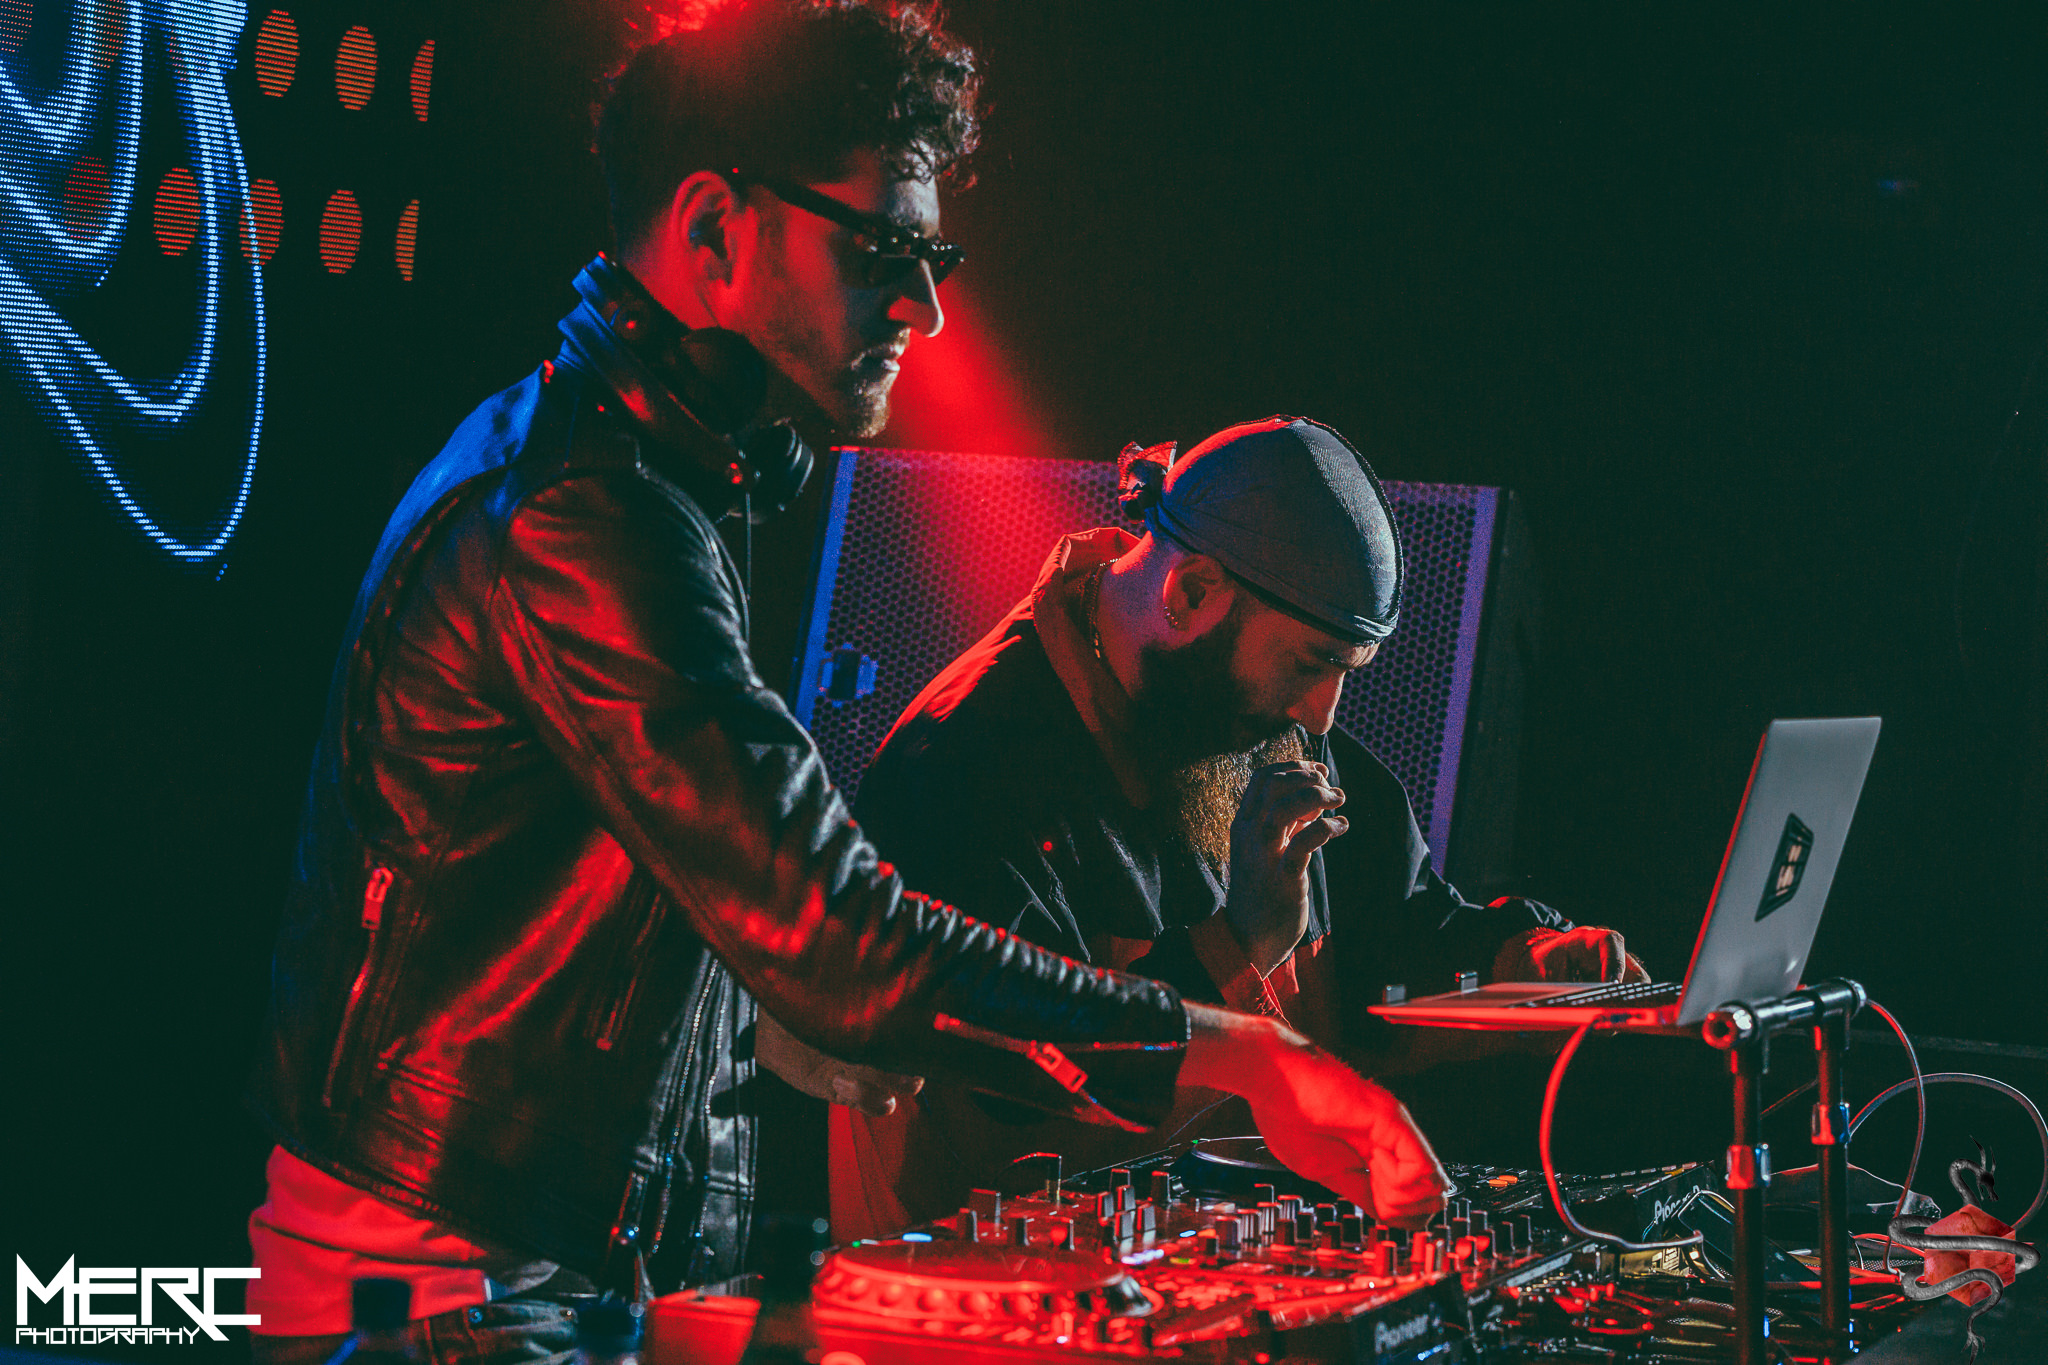 Chromeo – After Party DJ set